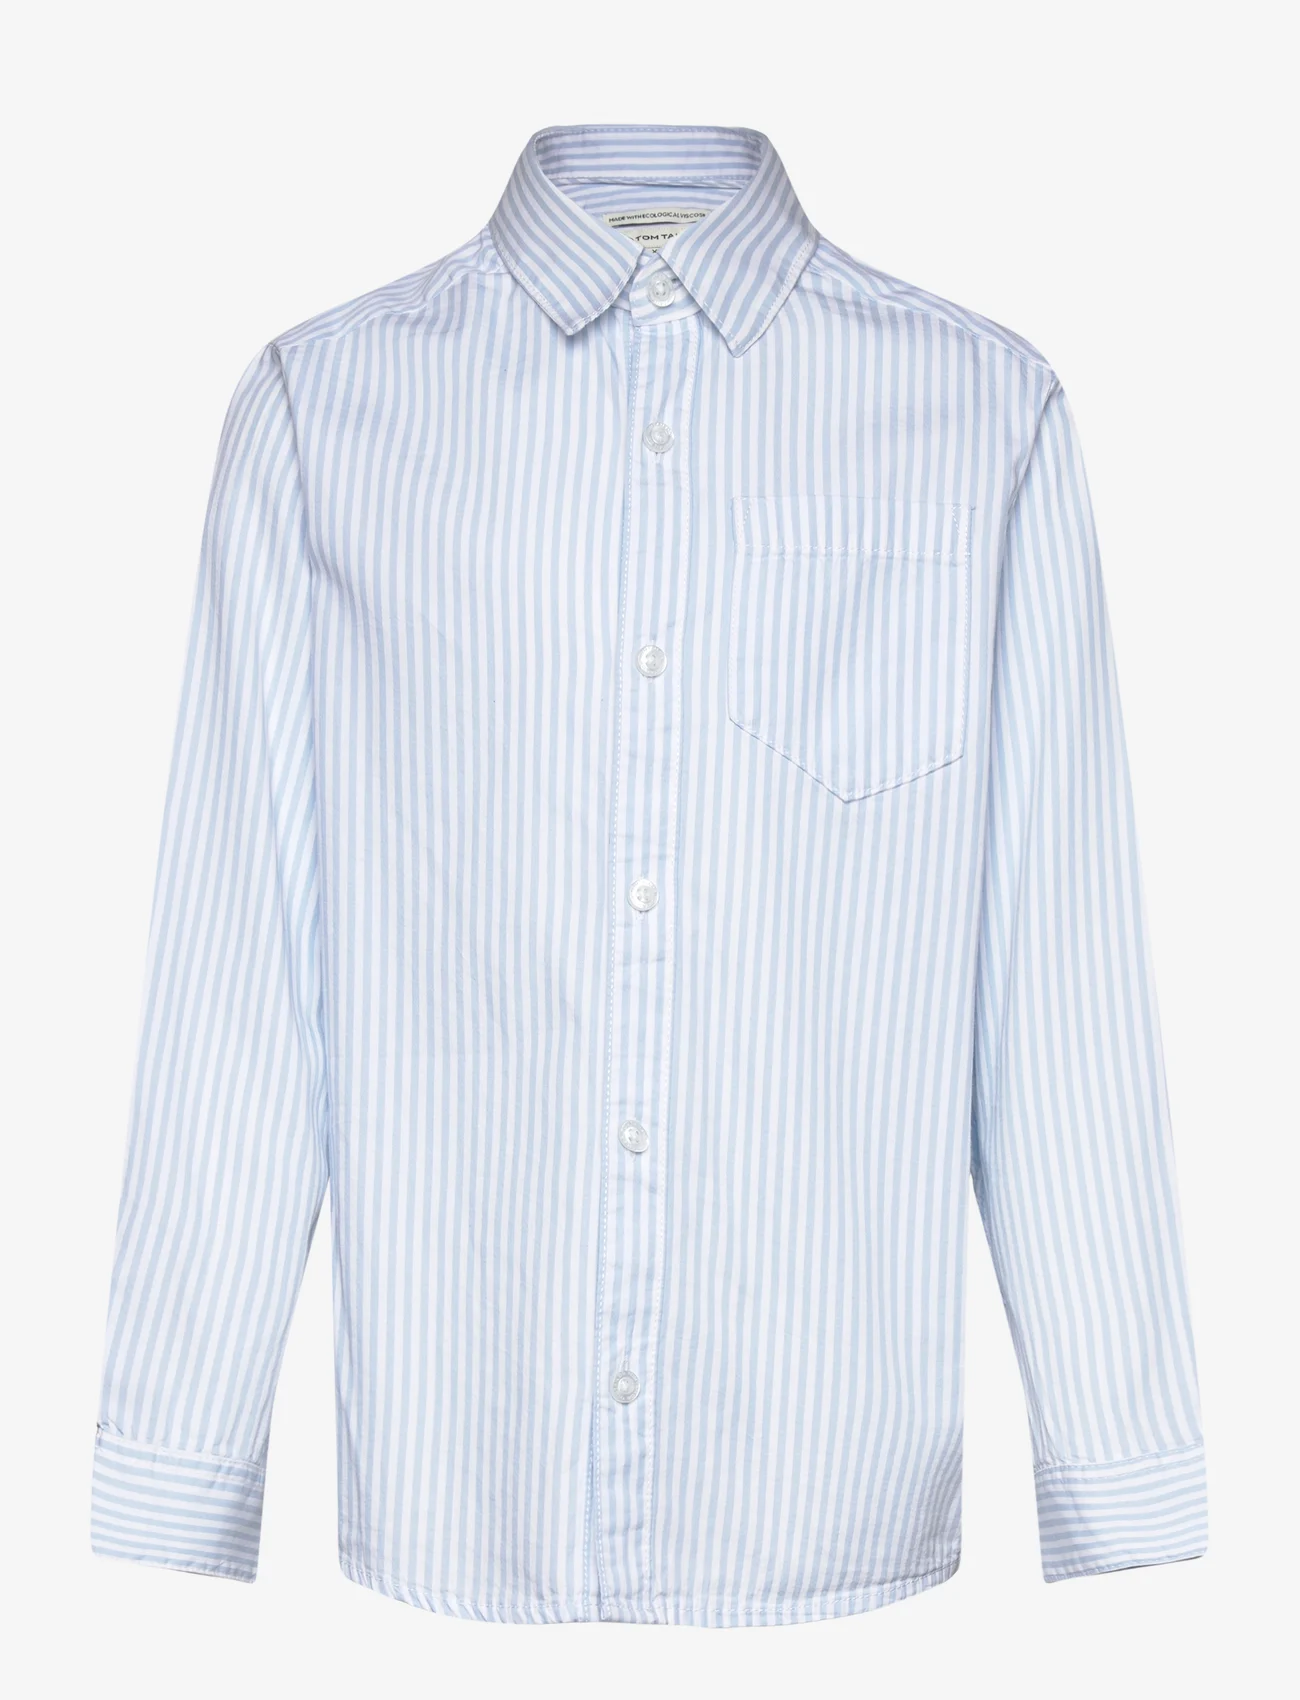 Tom Tailor - striped shirt - langærmede skjorter - blue white stripe - 0